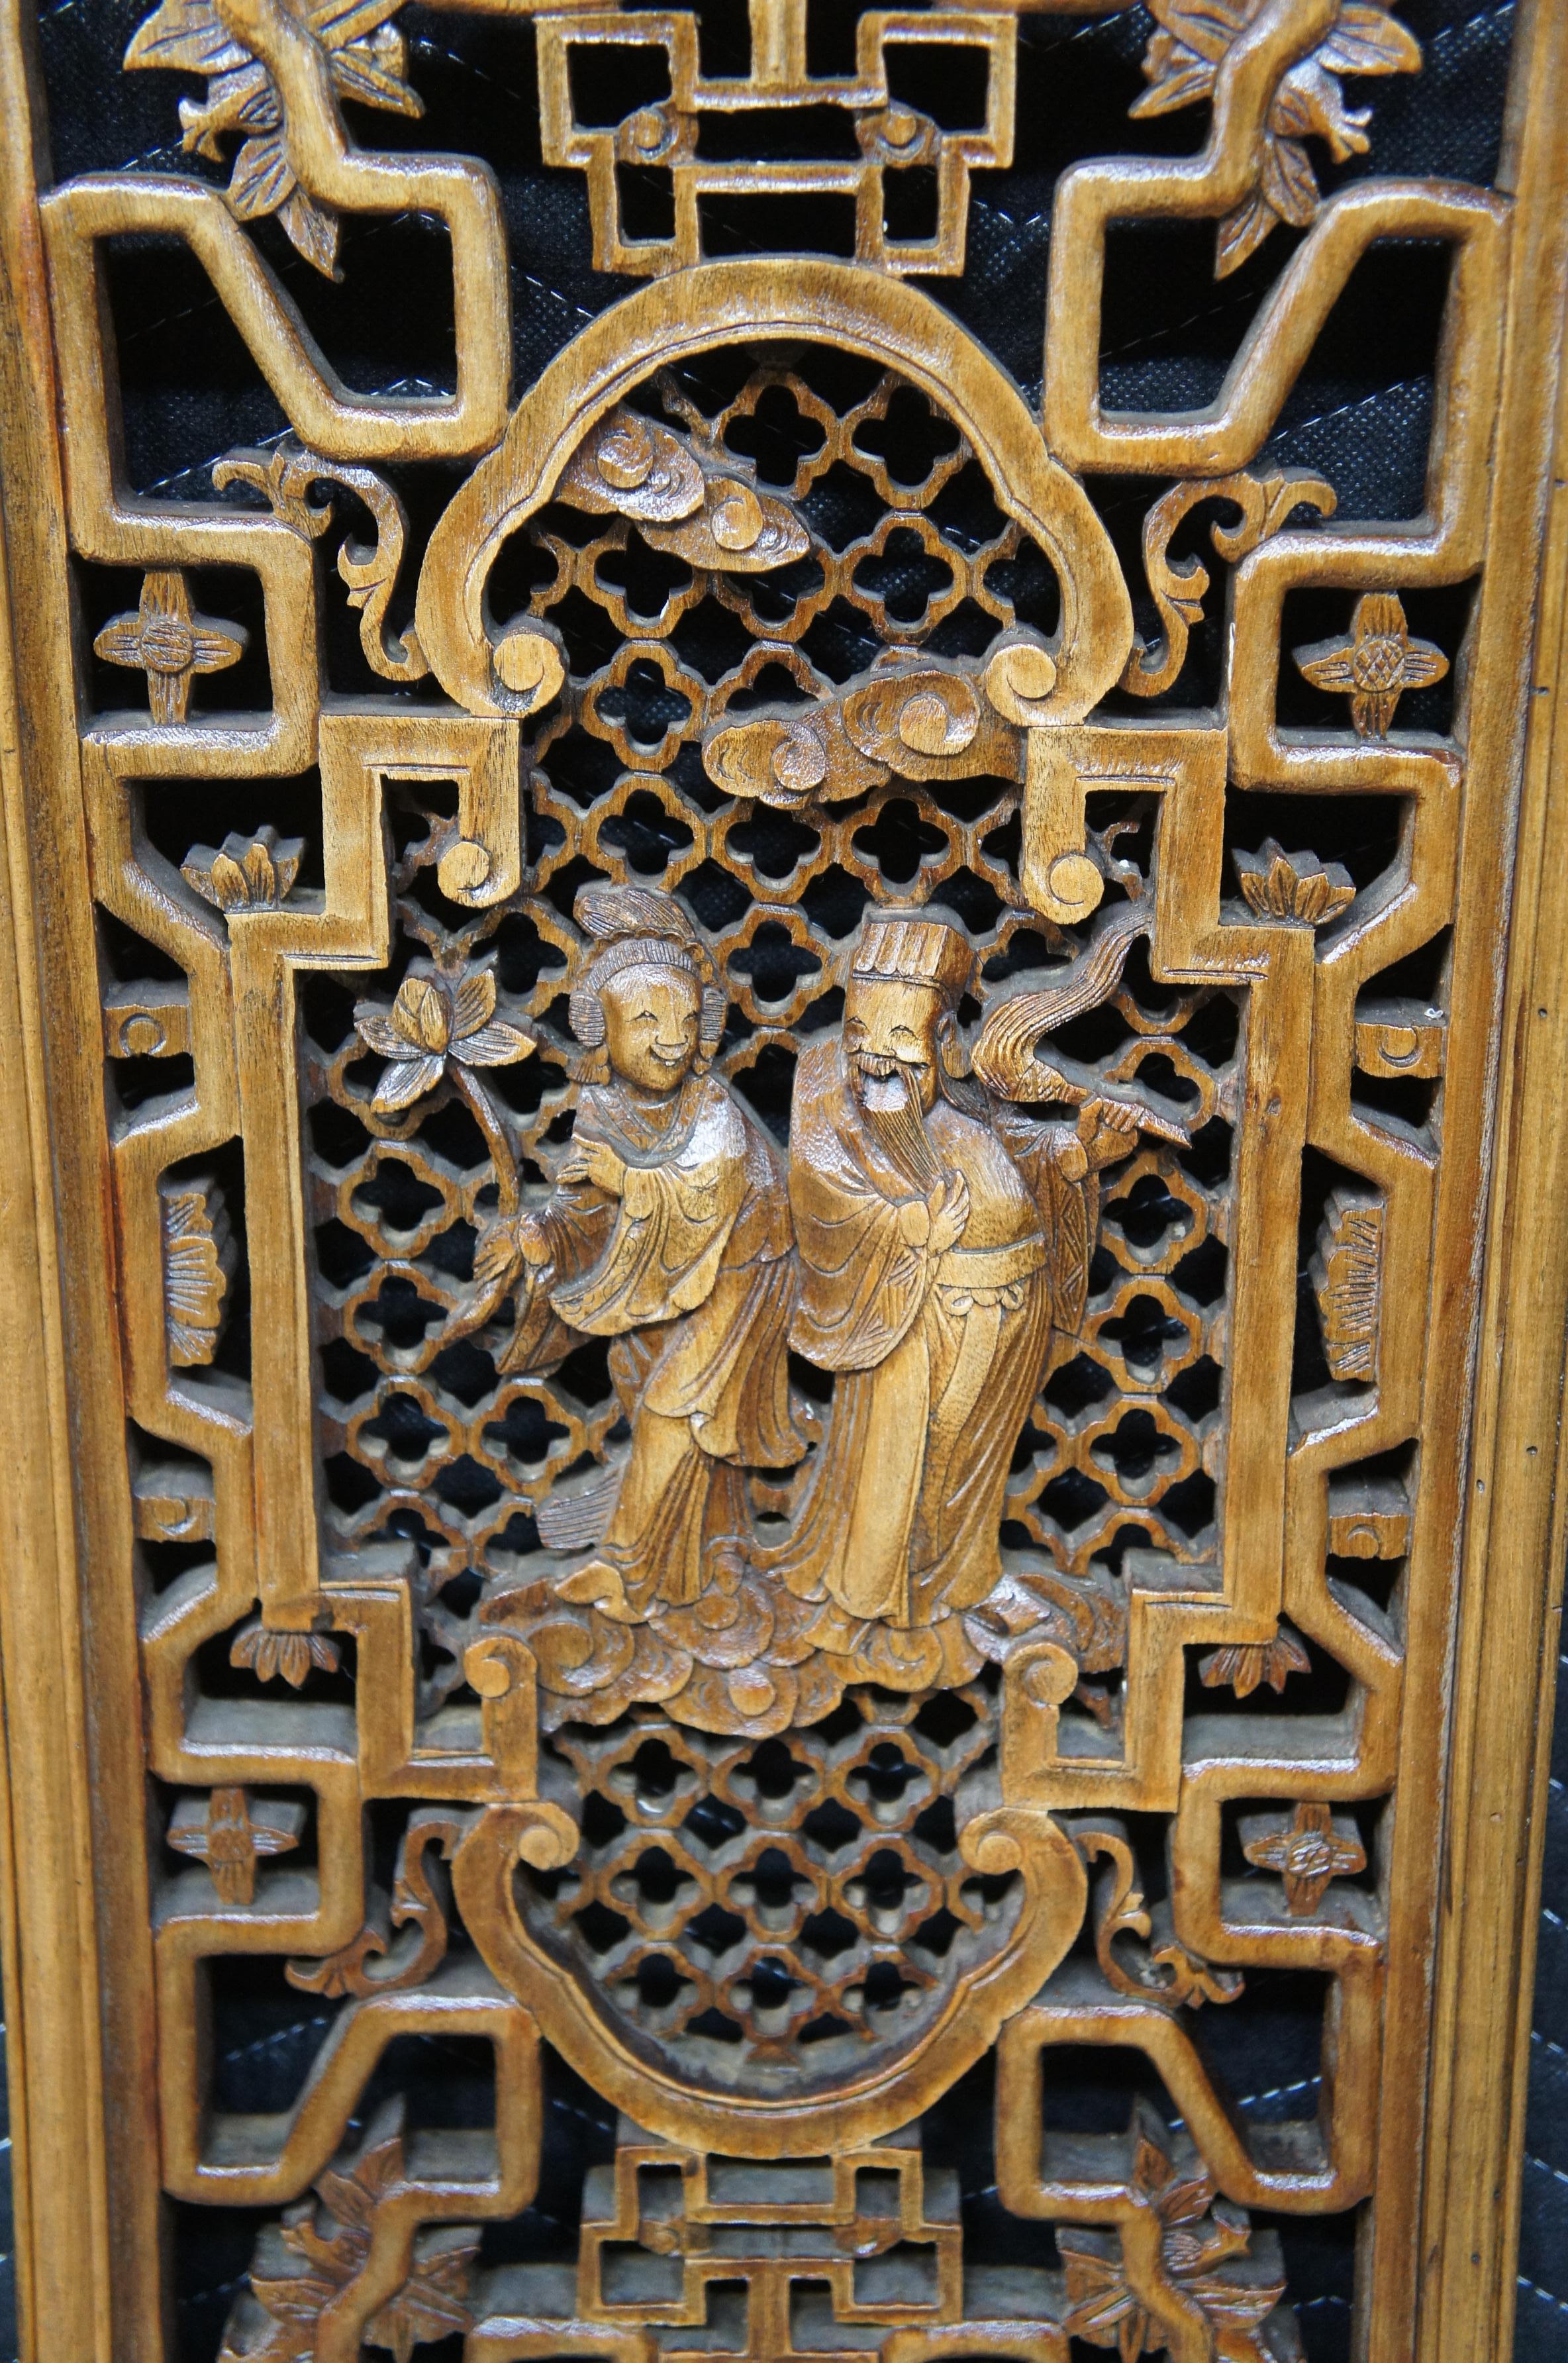 Hardwood 4 Chinese Carved Wood Wall Hanging Panels Immortal Figures Oriental Lattice 38